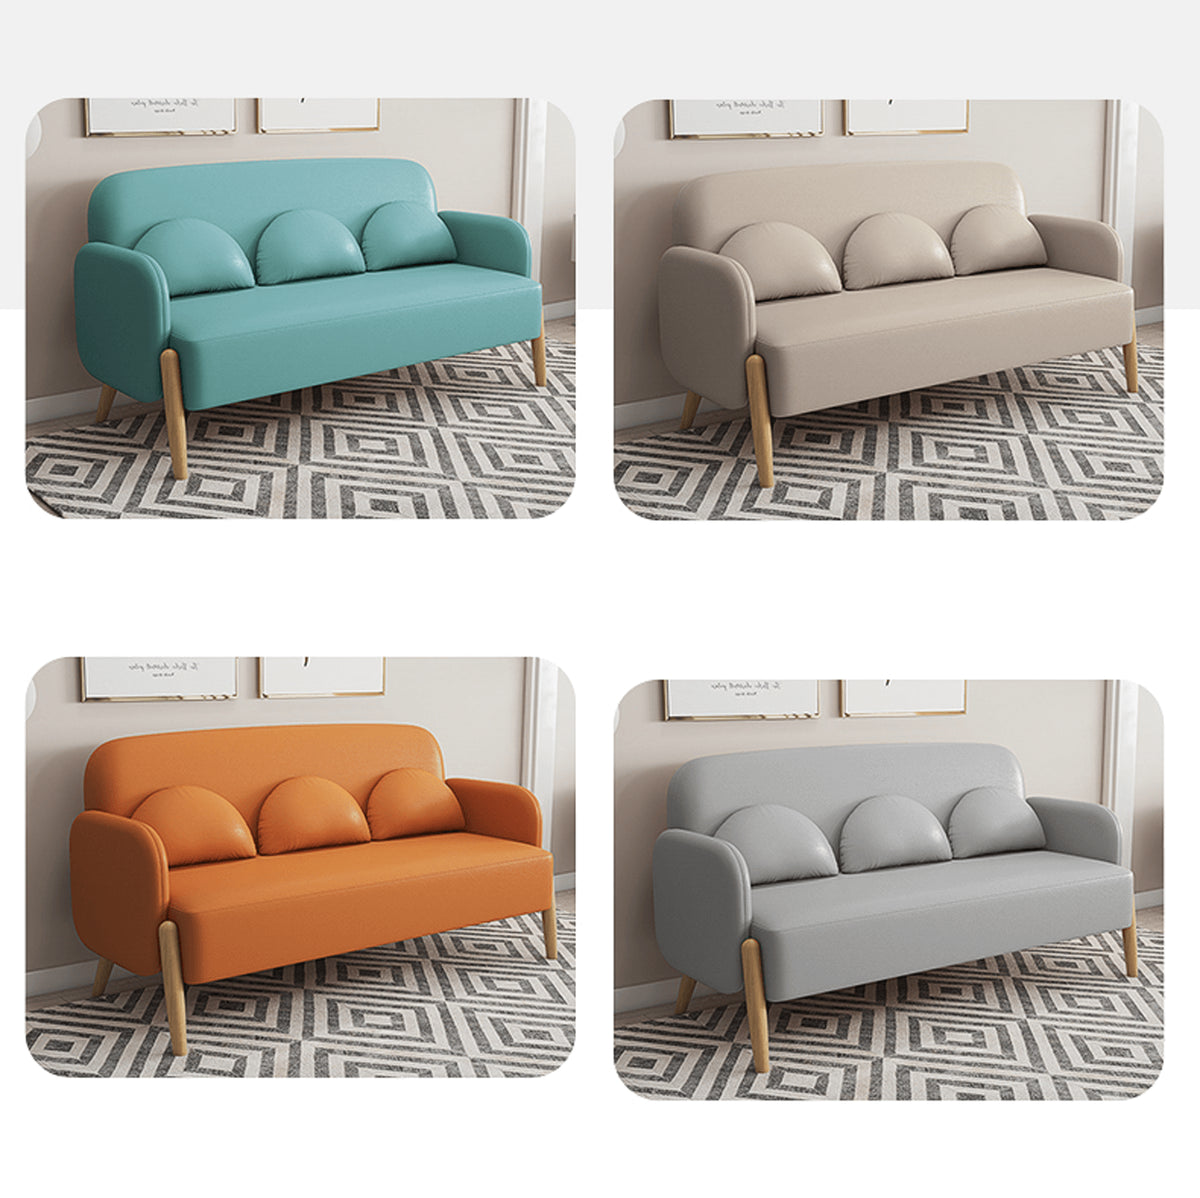 Stylish Cotton Corduroy Sofas: Khaki, Pink, Dark Green, Red & More – Premium Comfort in Techno Fabric jy-117